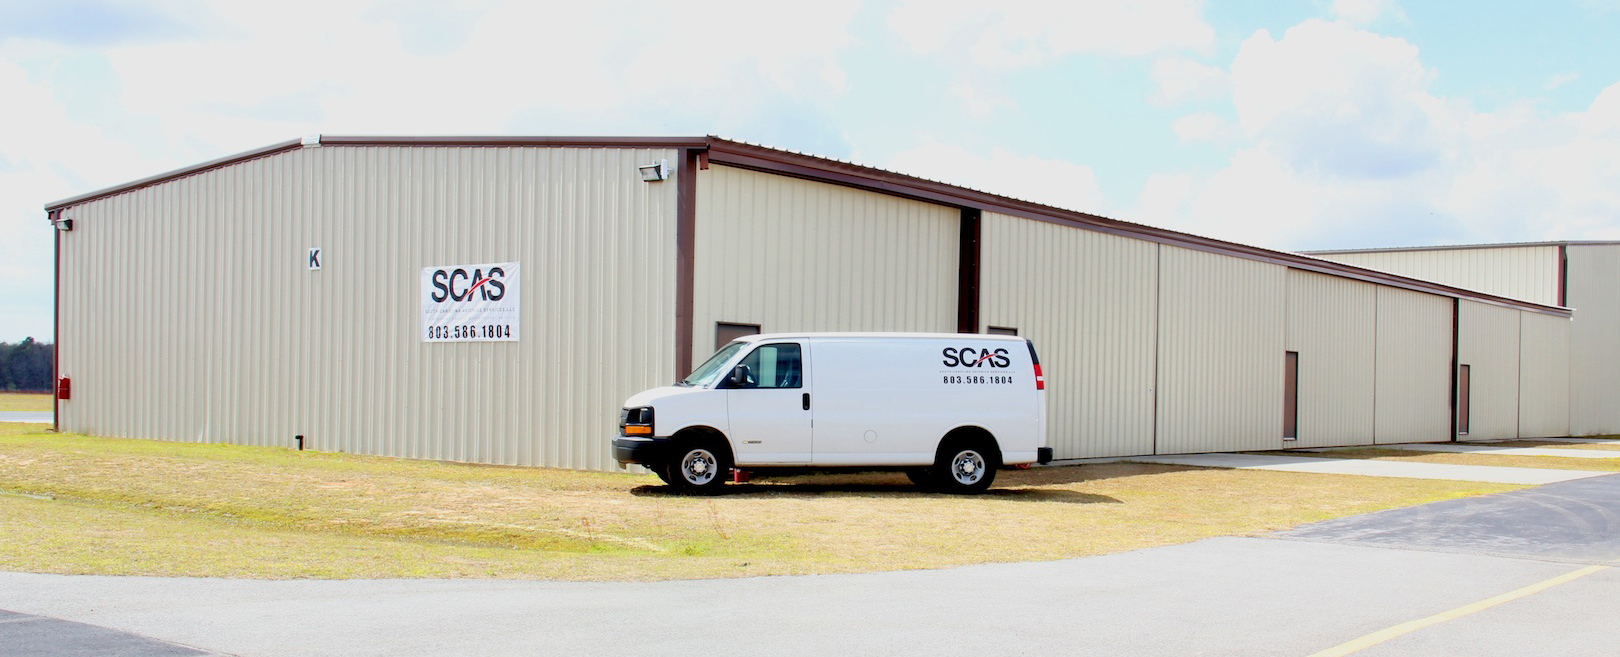 South Carolina Avionics Services LLC